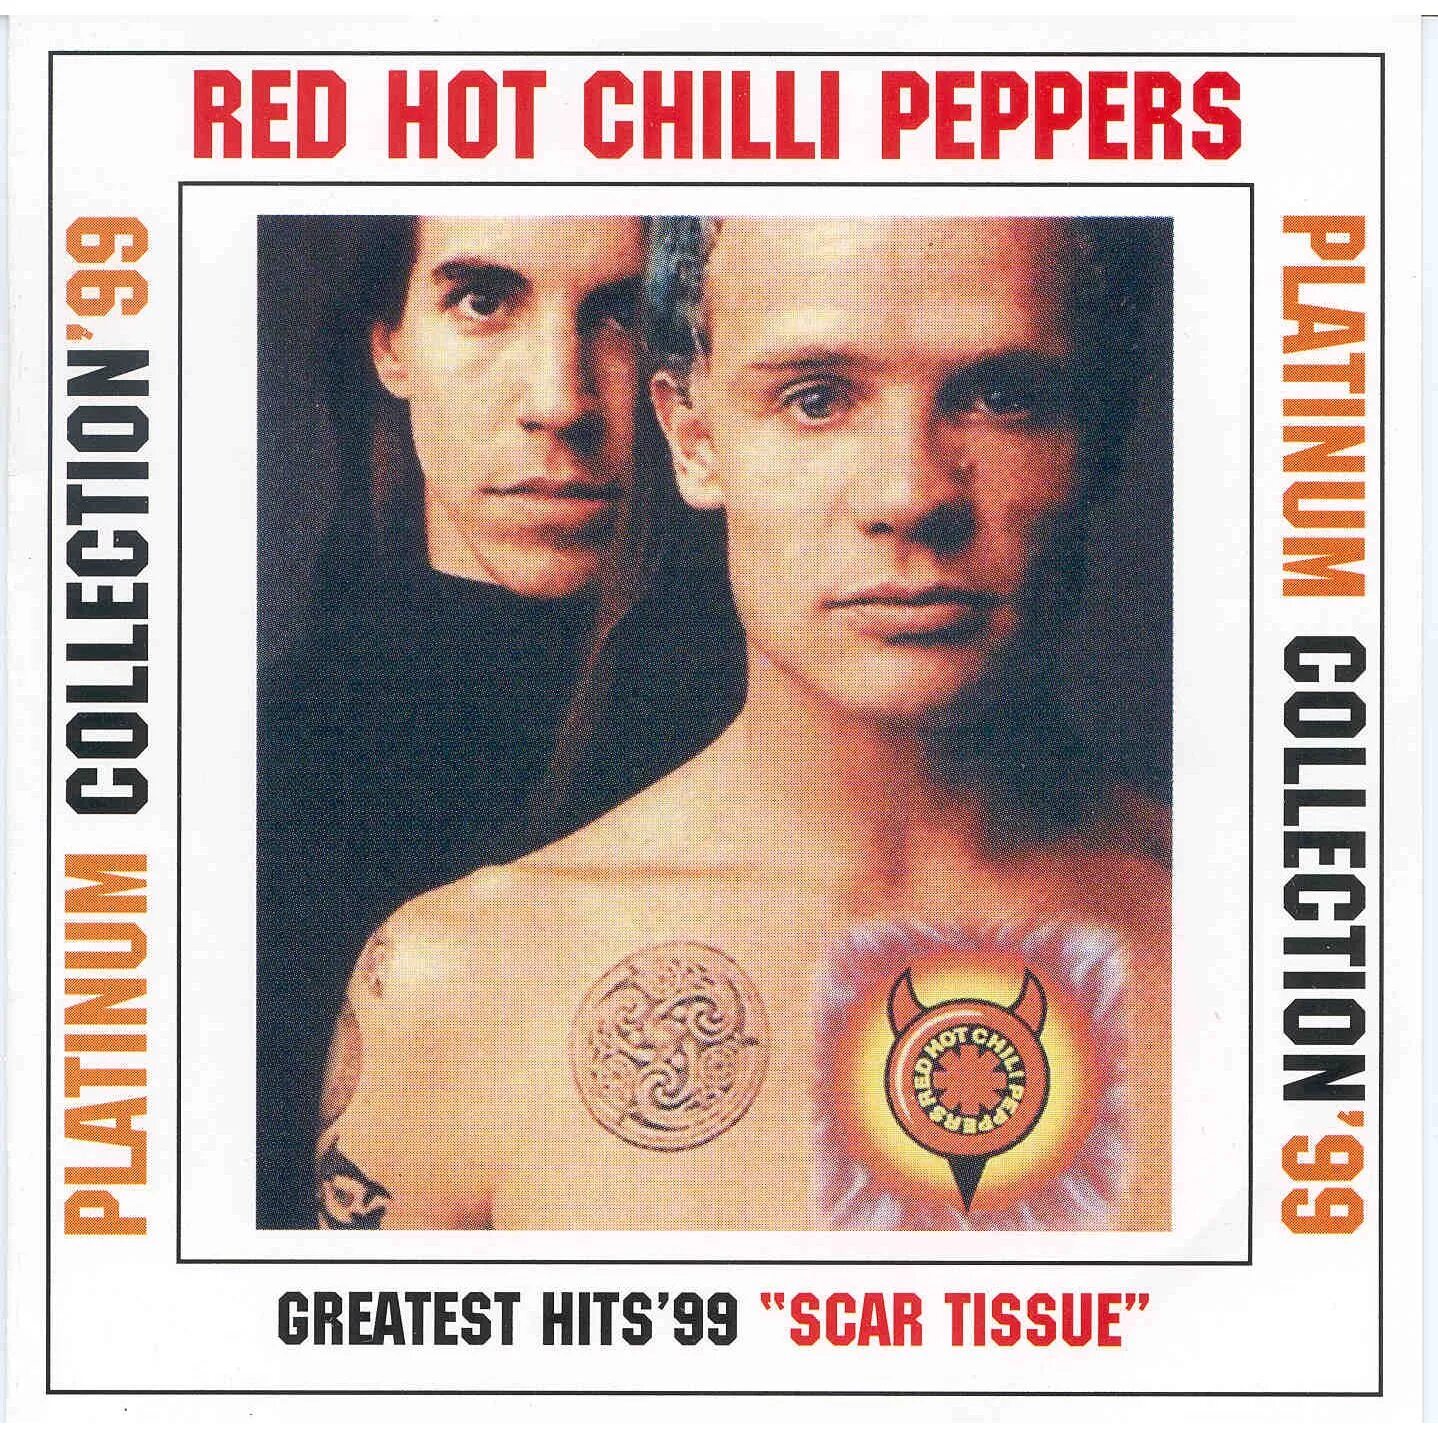 Chili peppers mp3. Ред хот Чили Пепперс. Red hot Chili Peppers обложка. Red hot Chili Peppers альбомы. RHCP обложки альбомов.